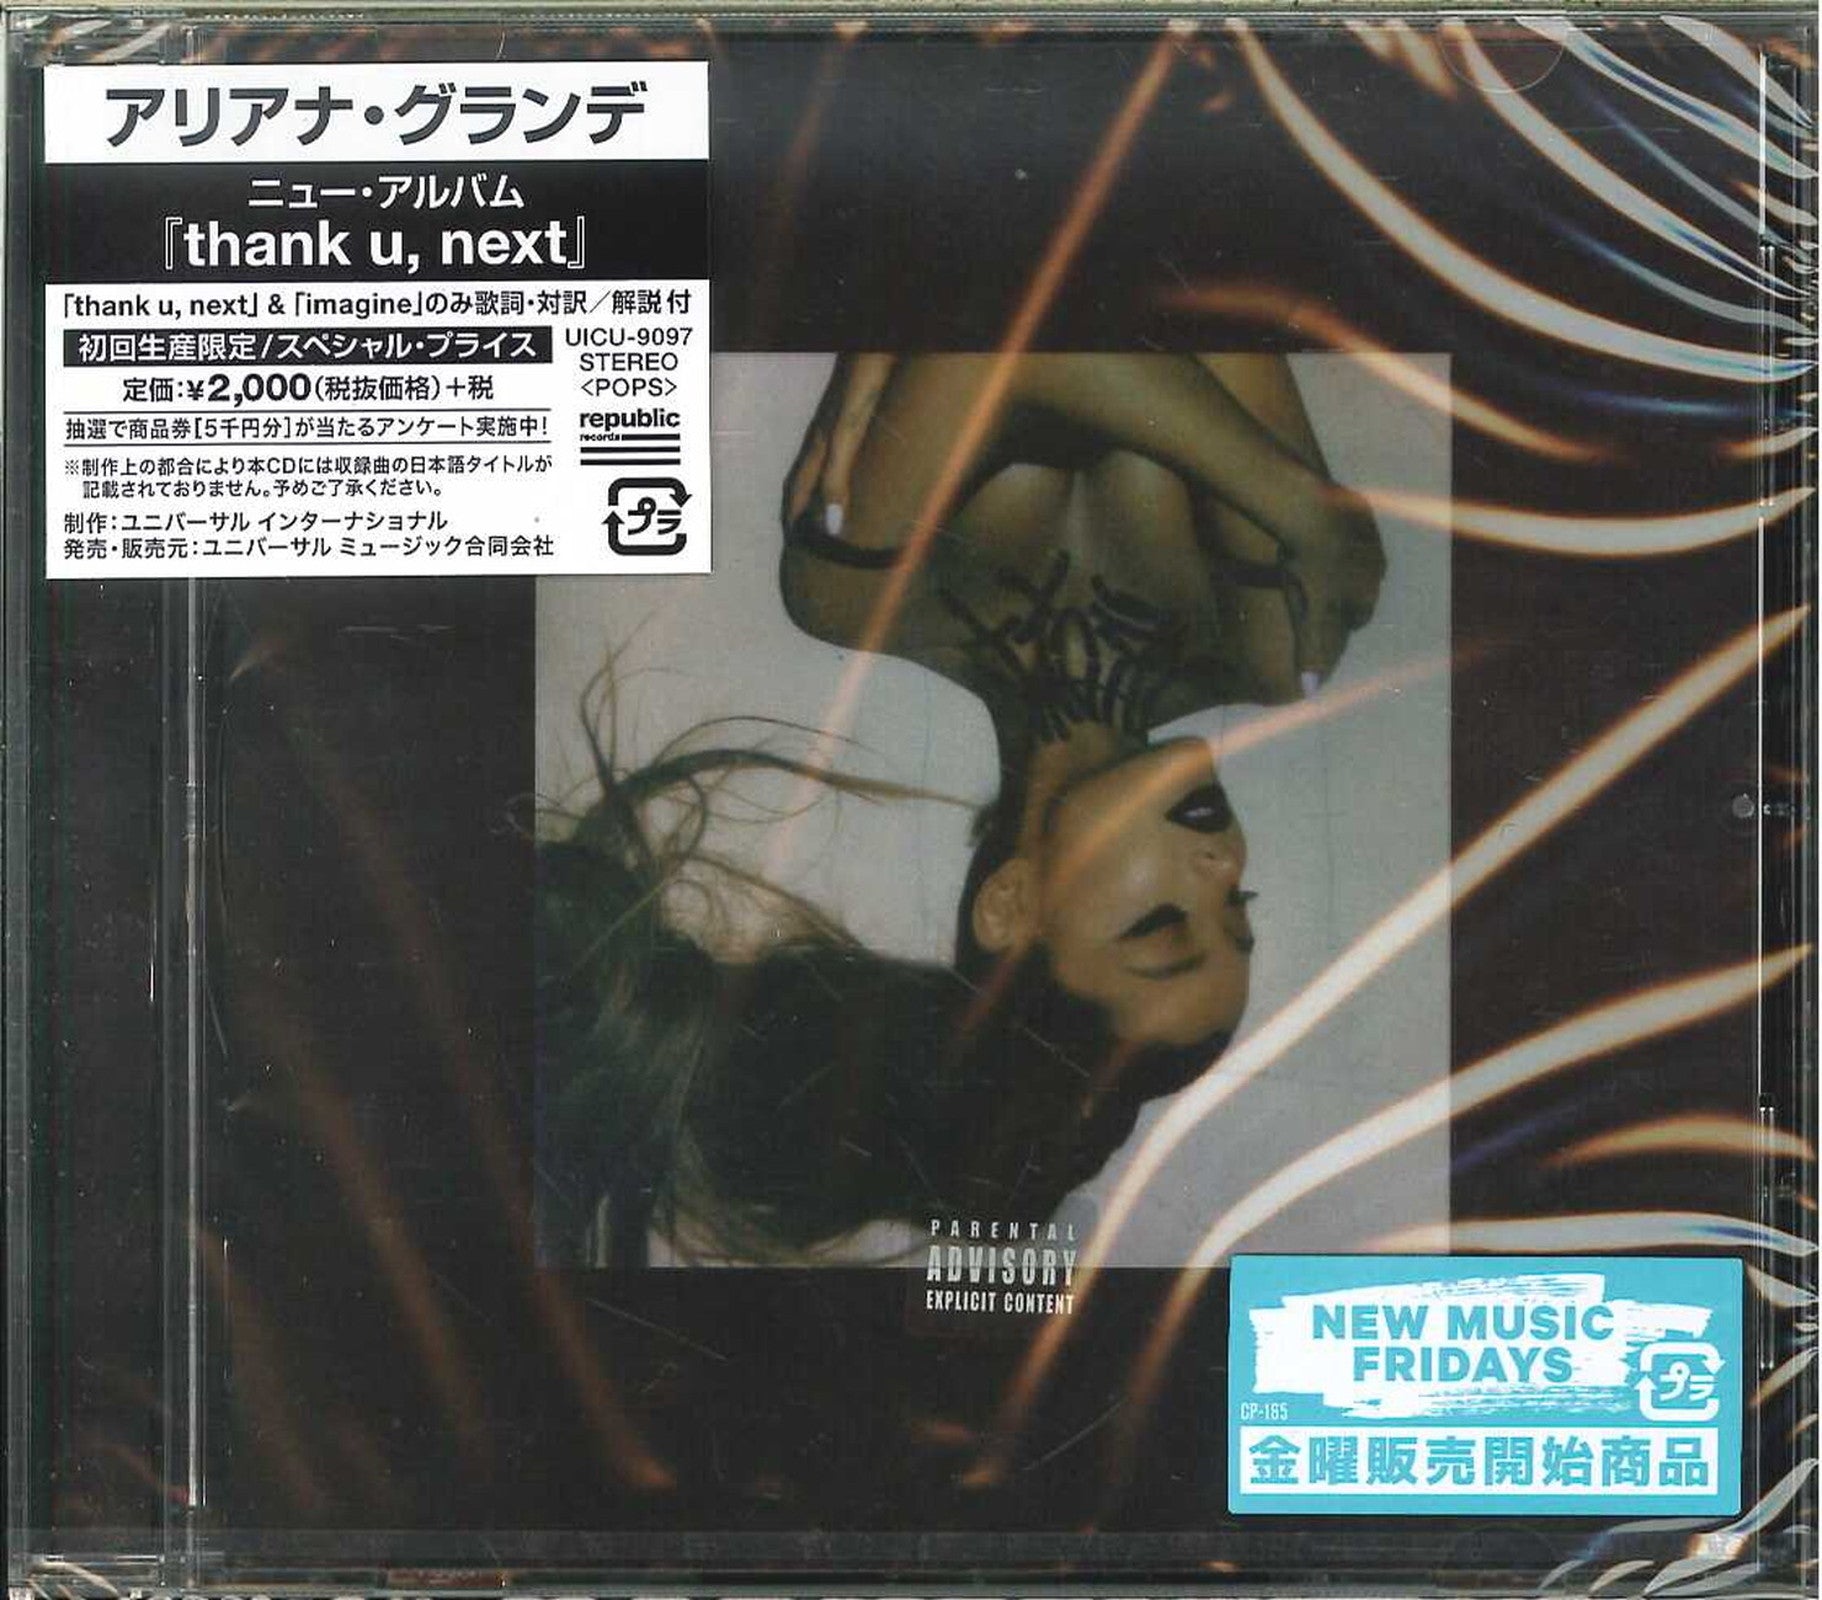 Ariana Grande - Thank U. Next - Japan CD Limited Edition – CDs